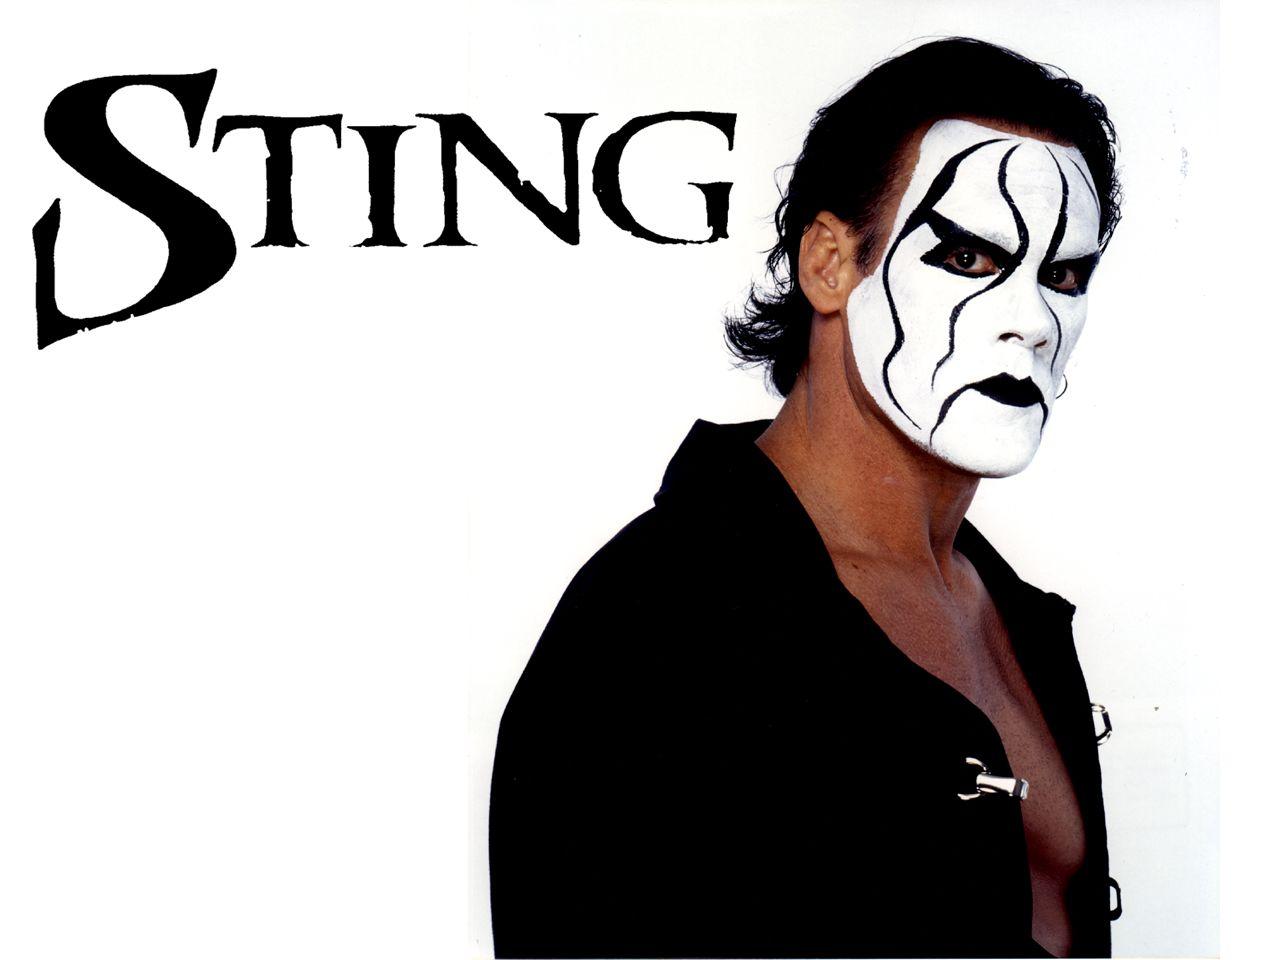 Sting's possible moniker